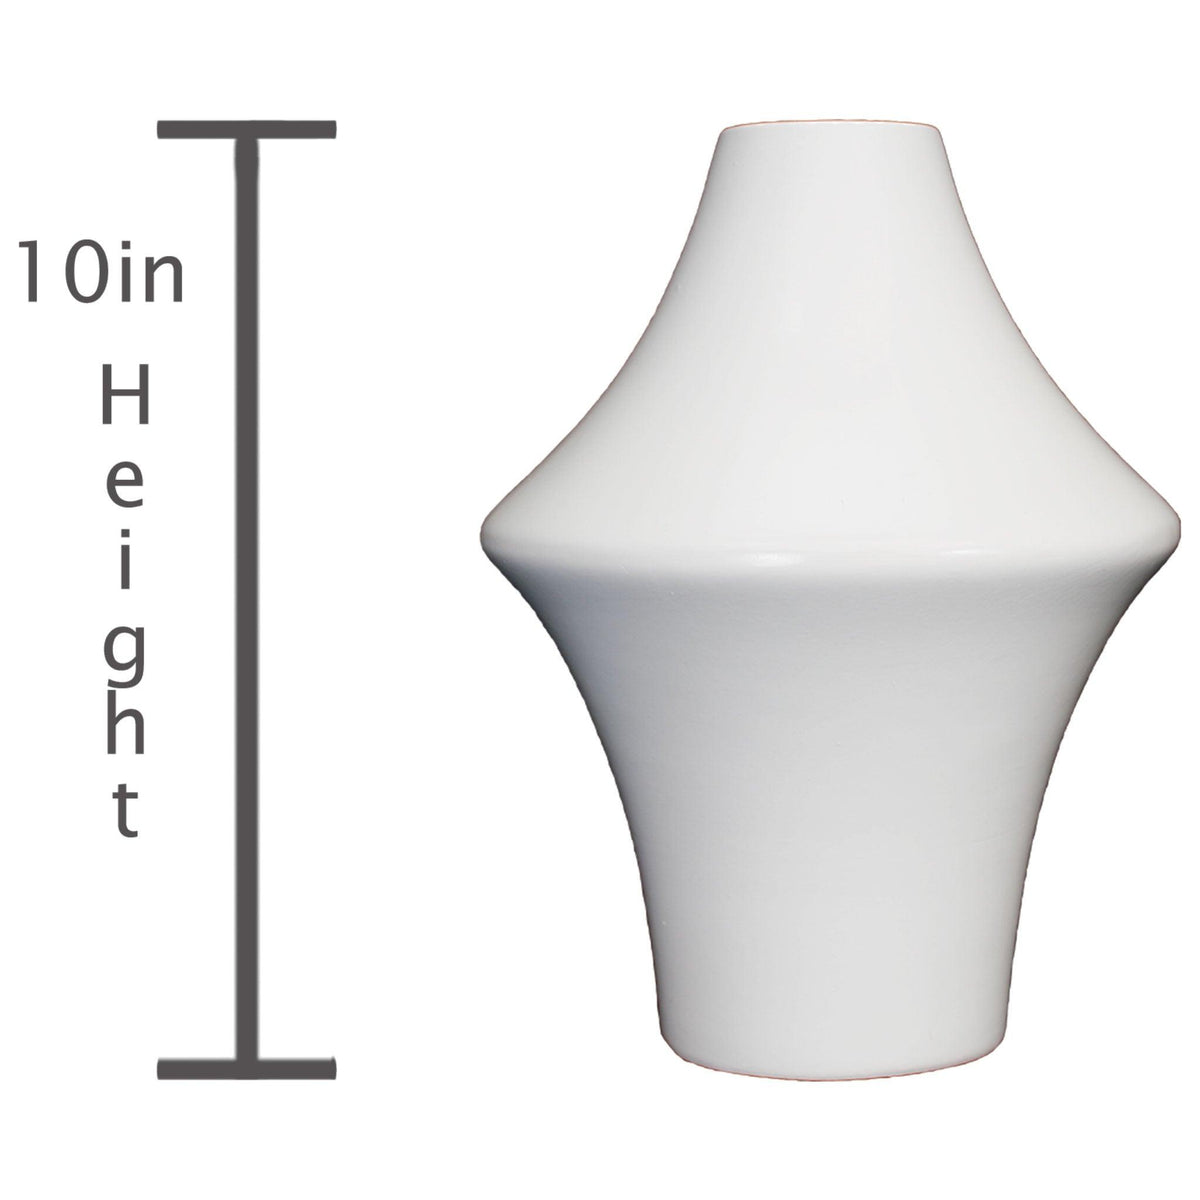 Lee Display's brand new 10in Kylix Ceramic Vase White Ceramic High Gloss Finish on sale at leedisplay.com